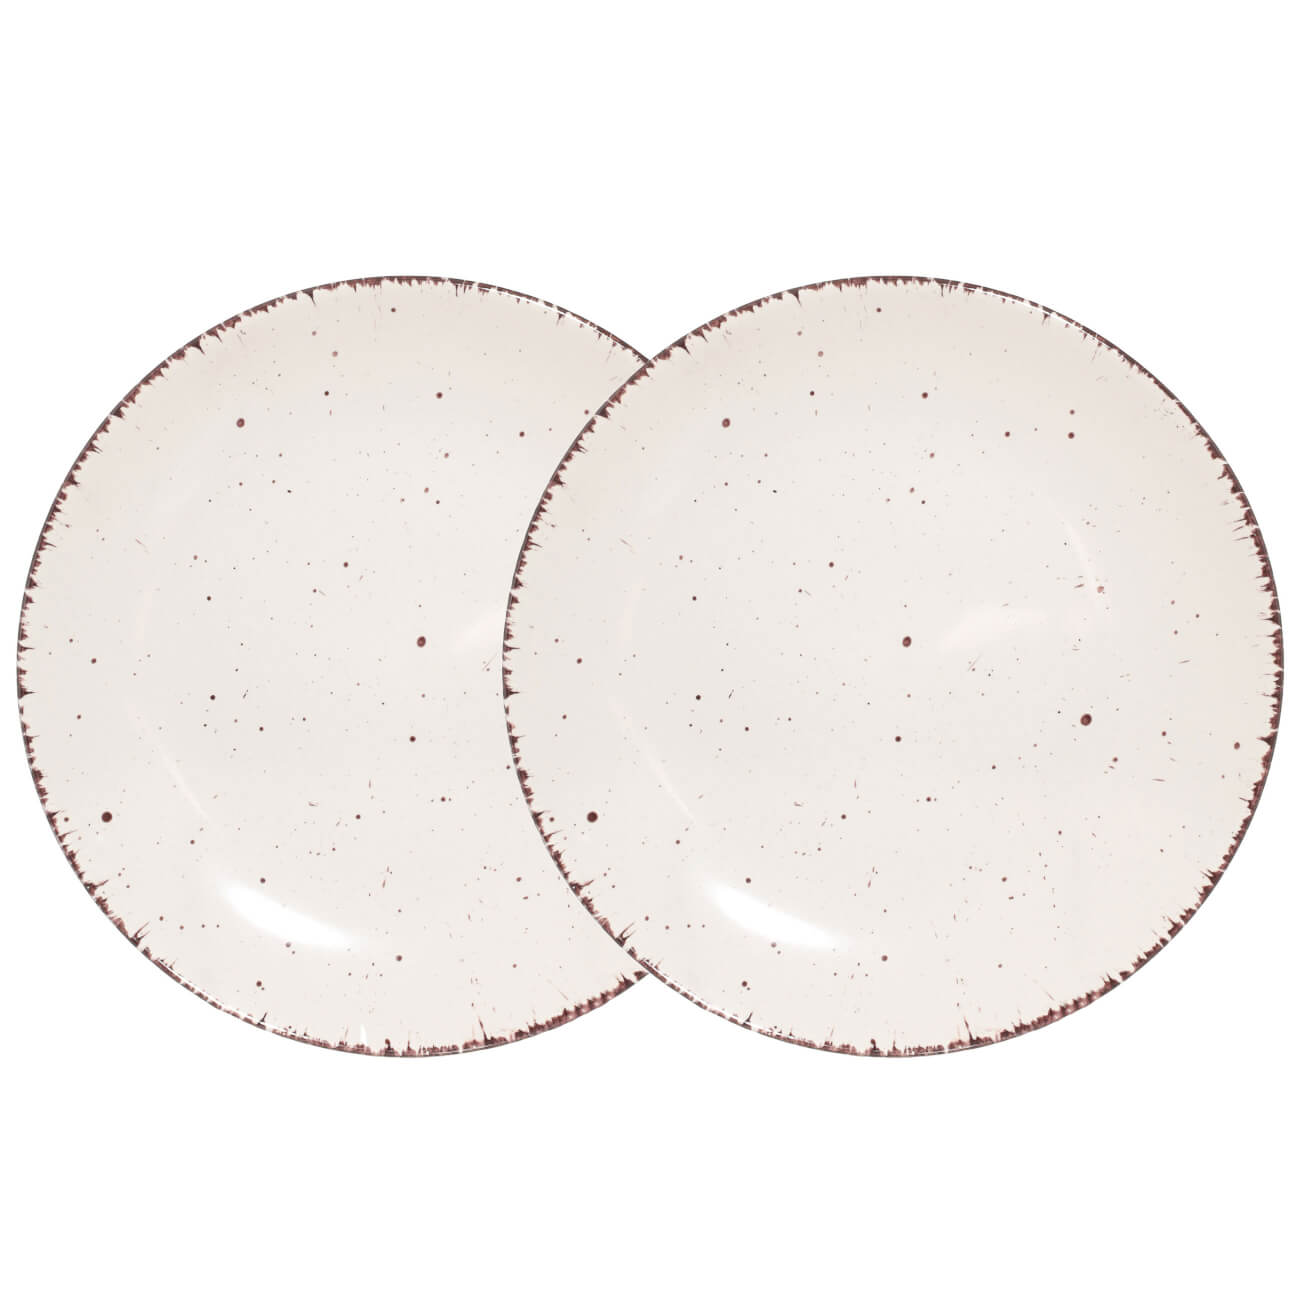 тарелка закусочная охота 21 см imari im1531 h a3461 Тарелка закусочная, 21 см, 2 шт, керамика, бежевая, в крапинку, Speckled